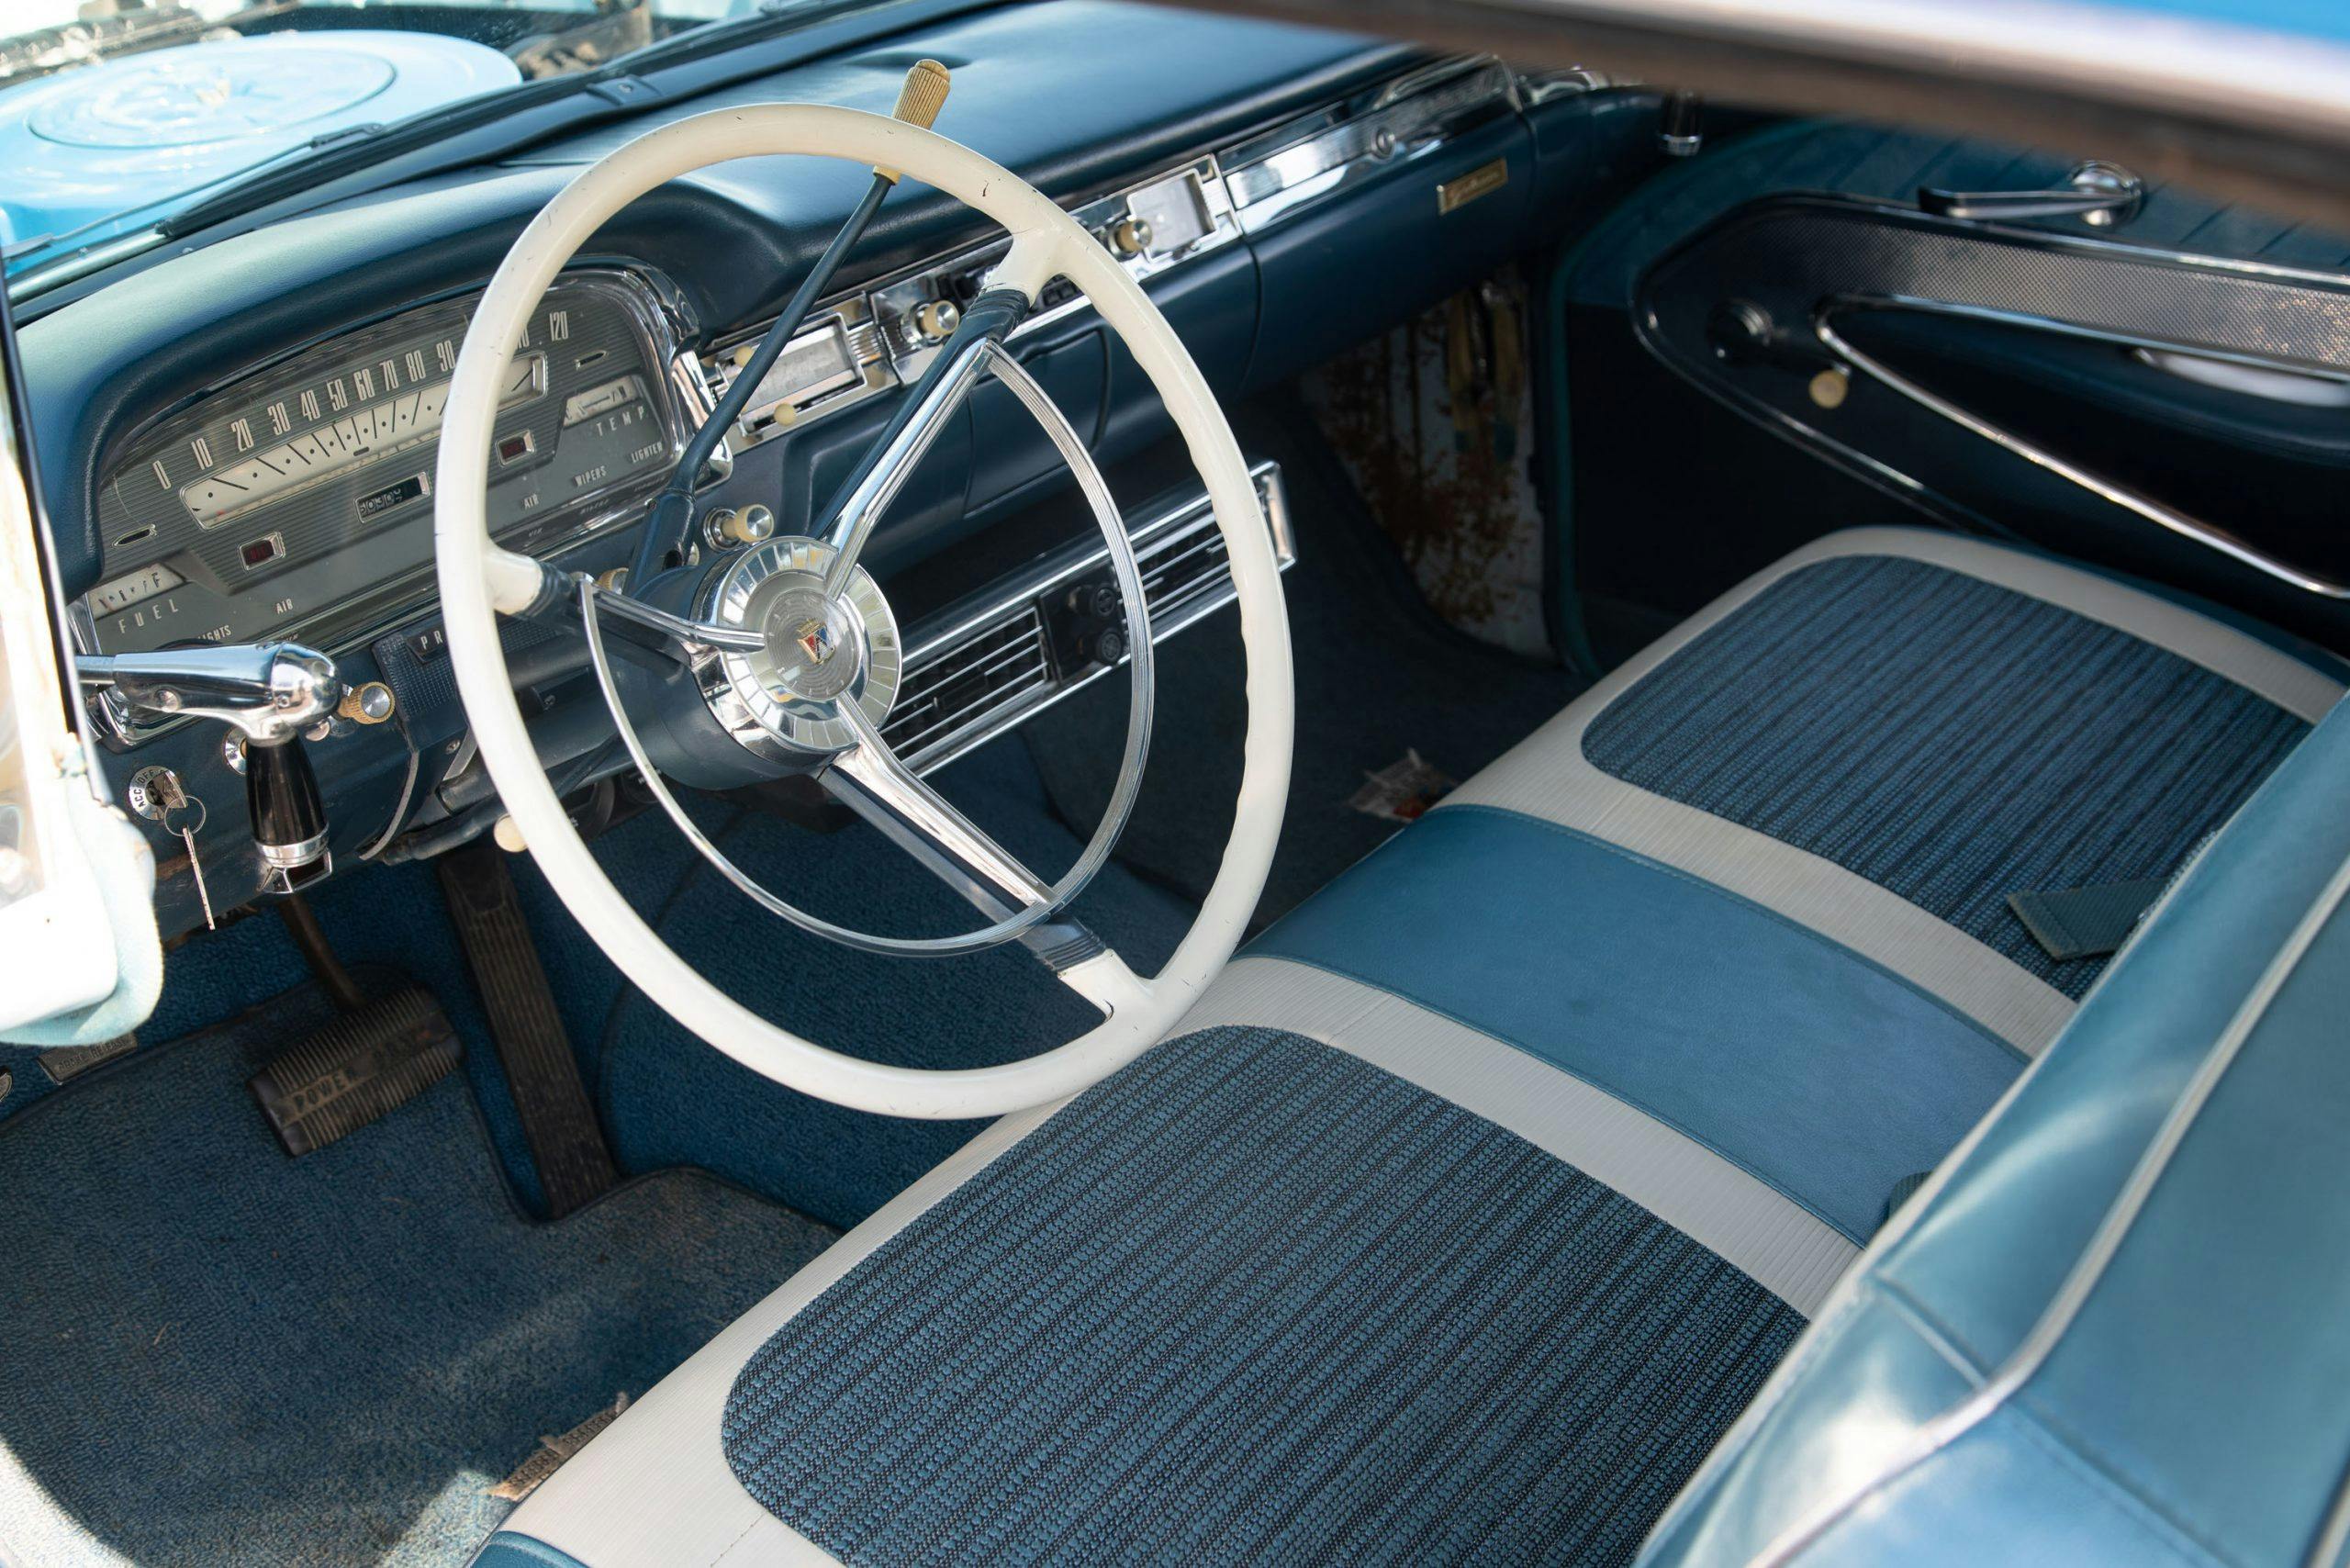 1959 Ford Fairlane 500 Galaxie Skyliner interior